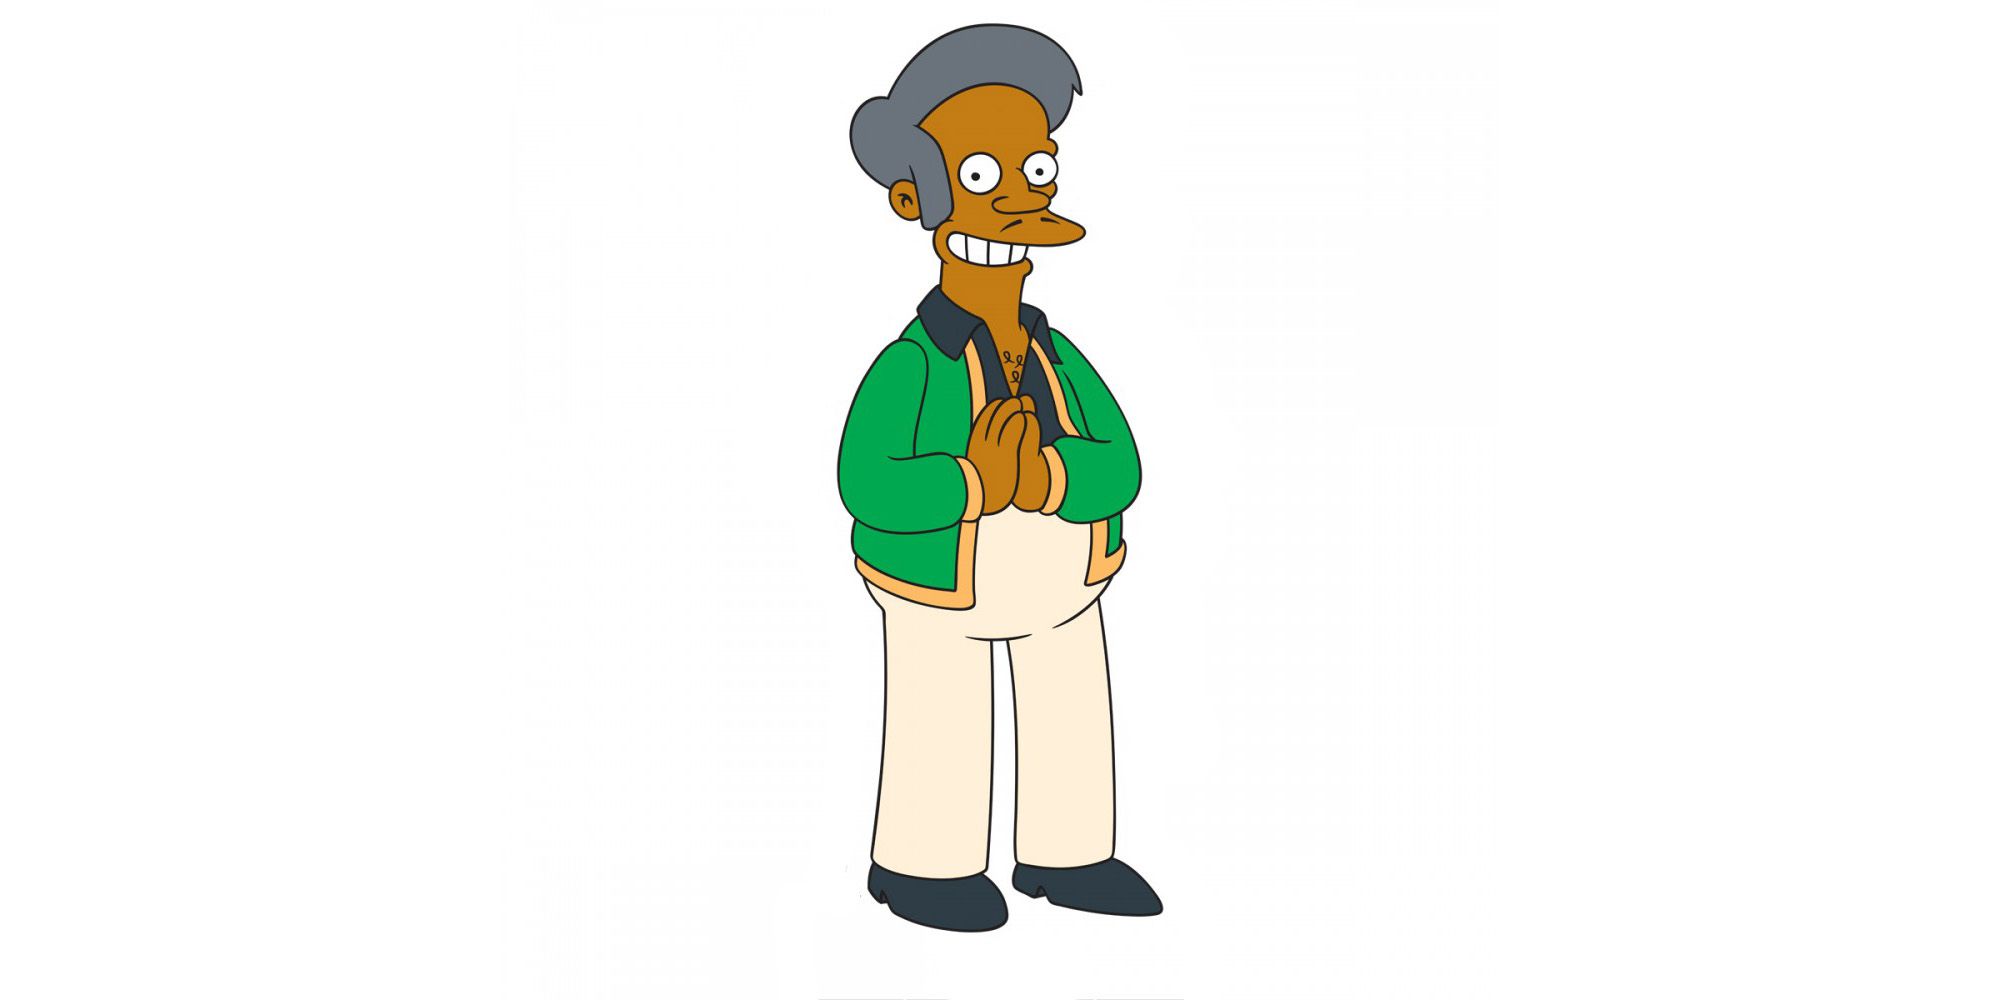 Apu Simpsons